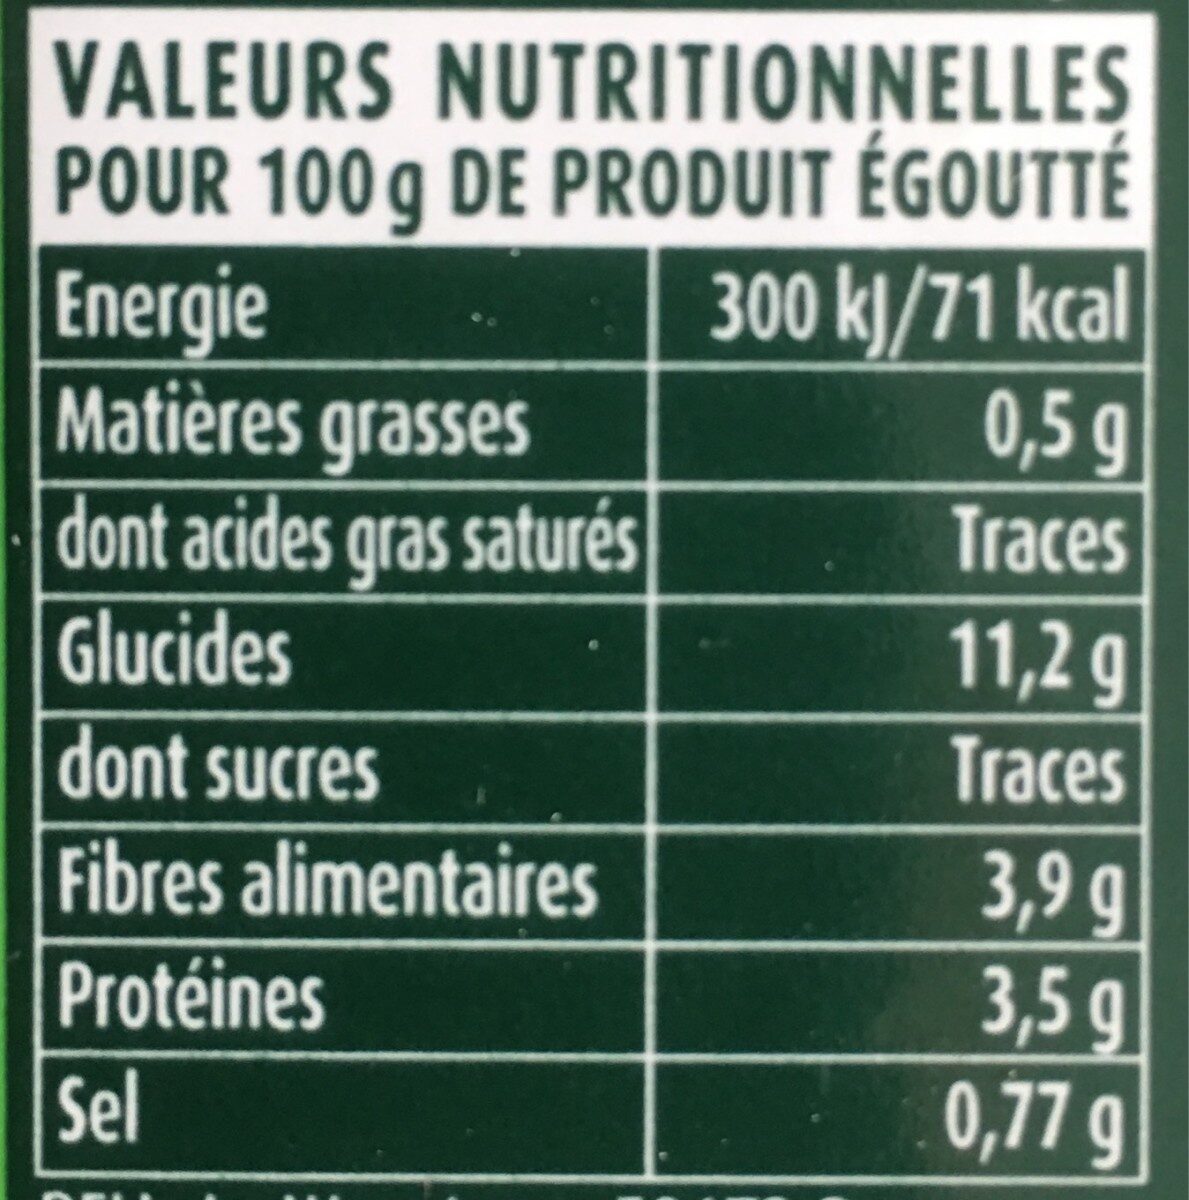 Jardinière - Tableau nutritionnel